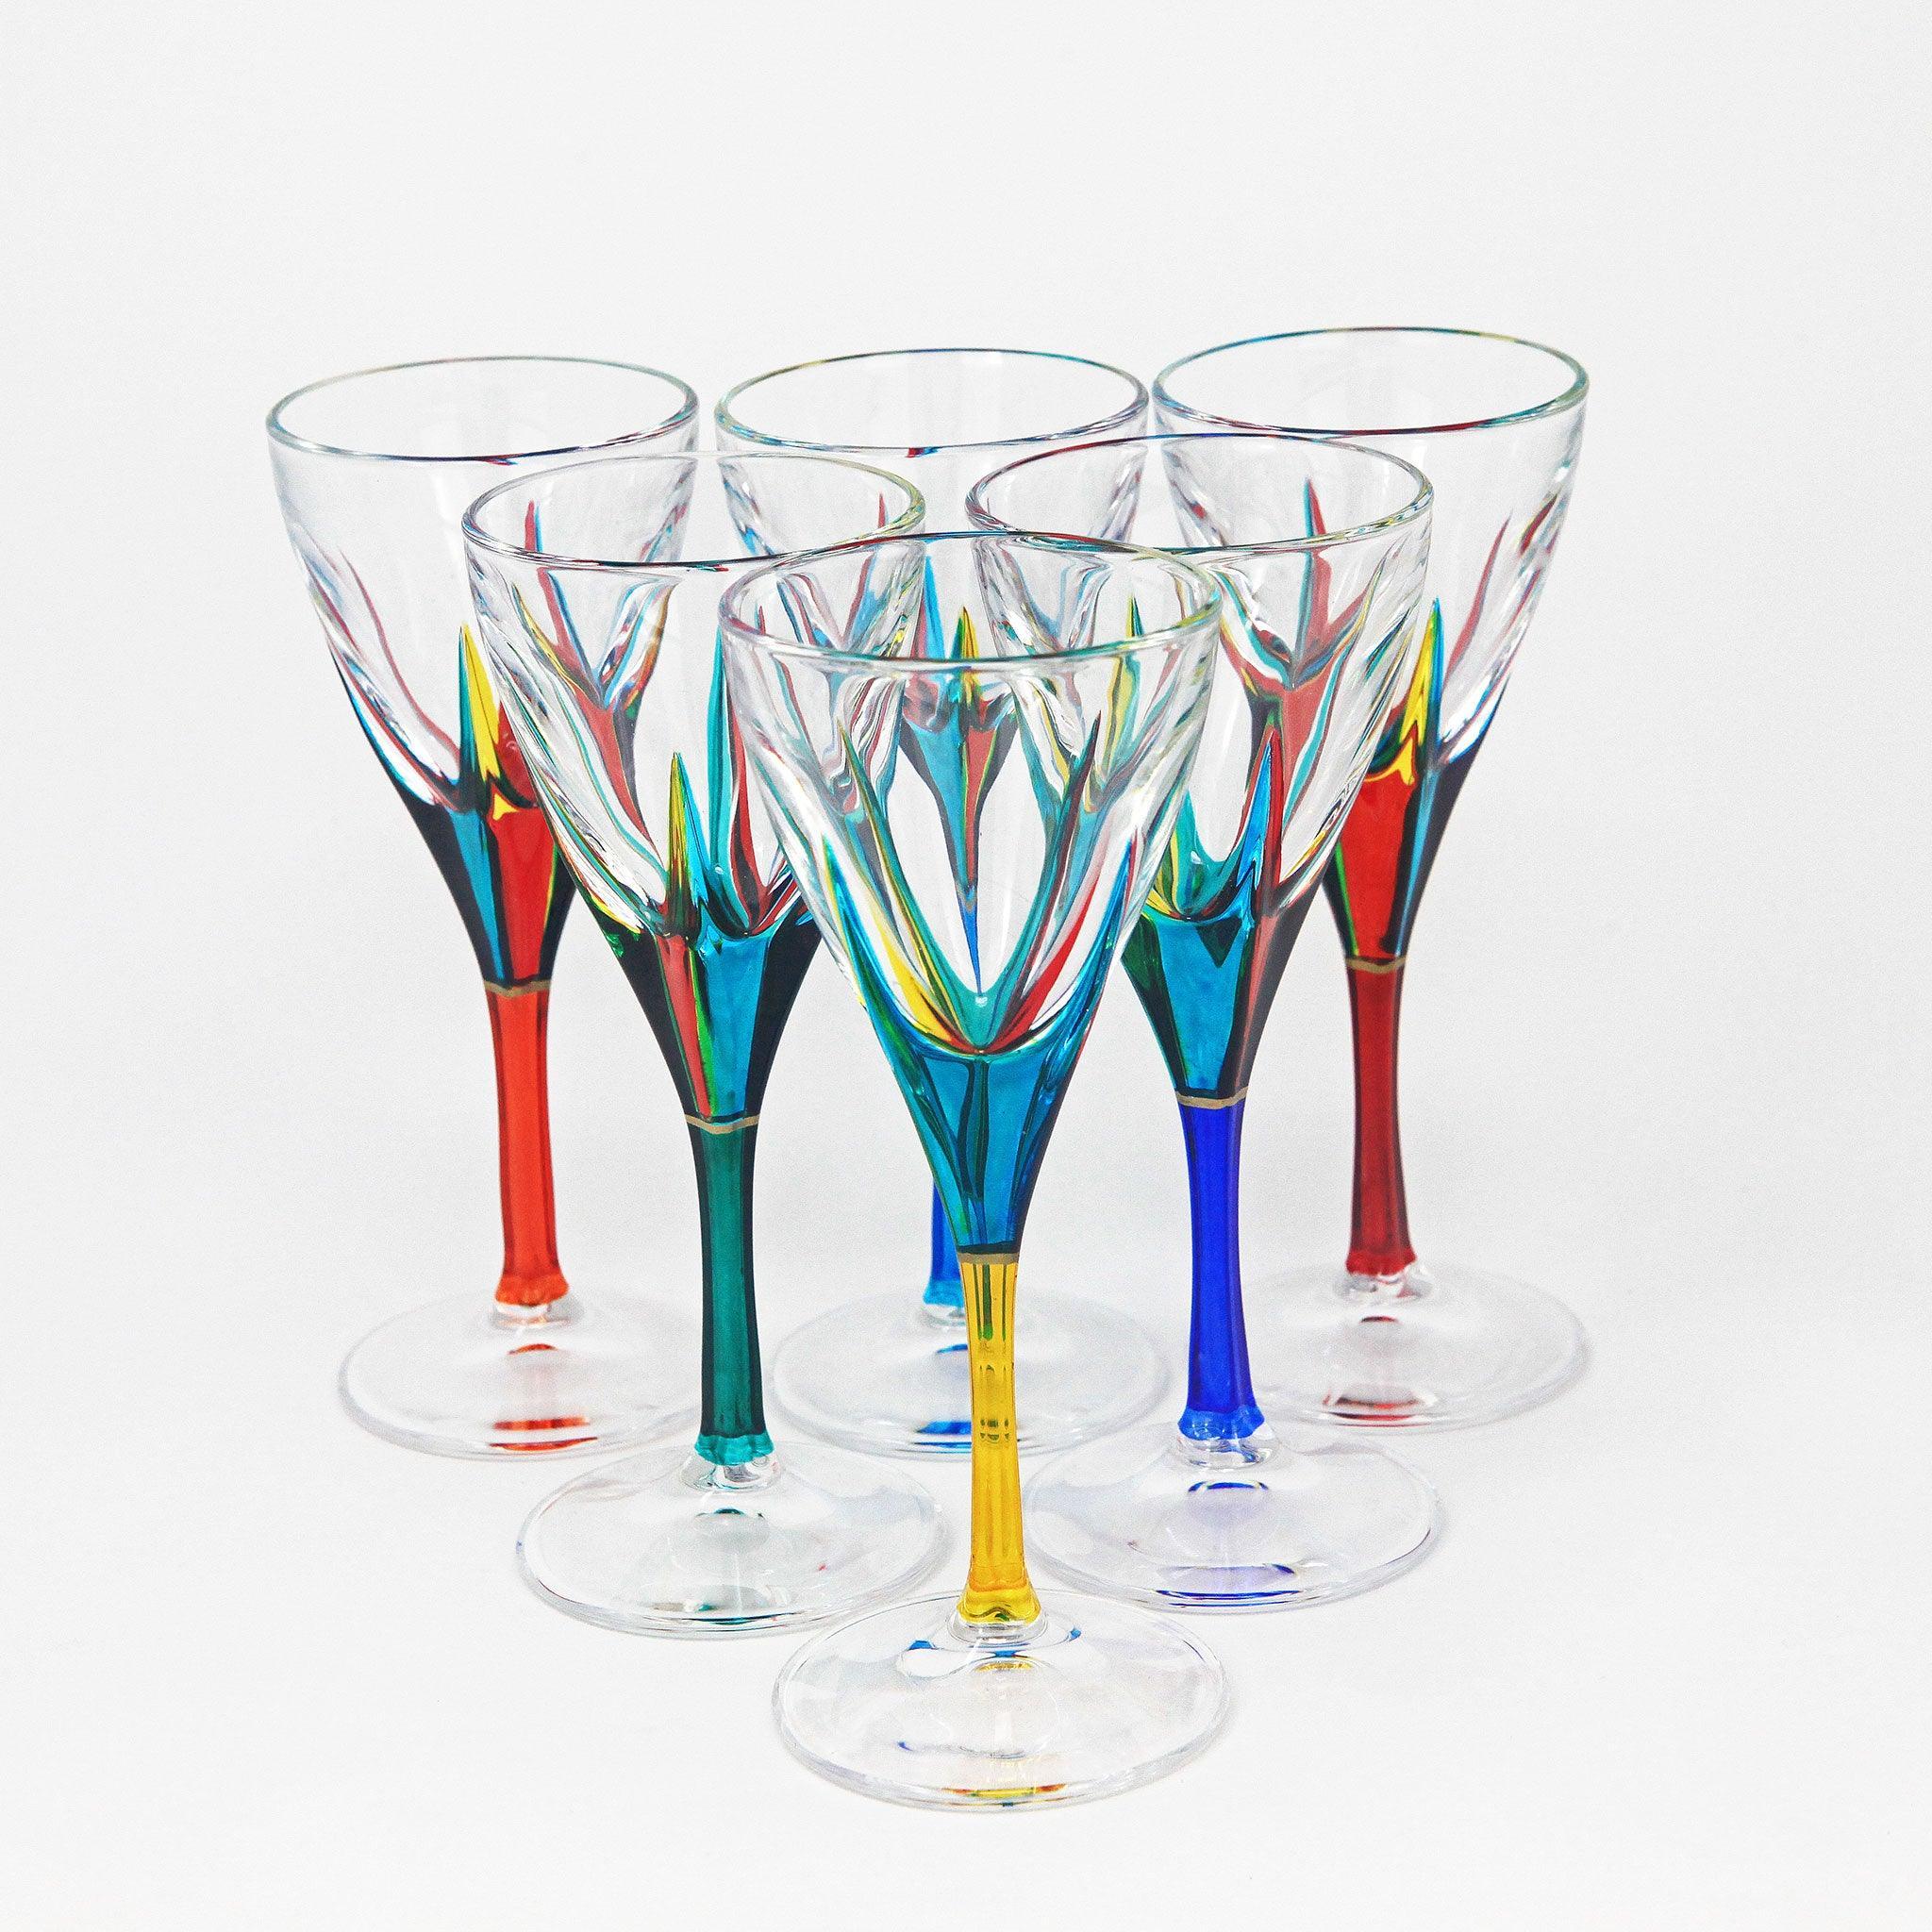 Fusion Wine Glasses, 8 oz Glasses, Hand-Painted Italian Crystal, Set o